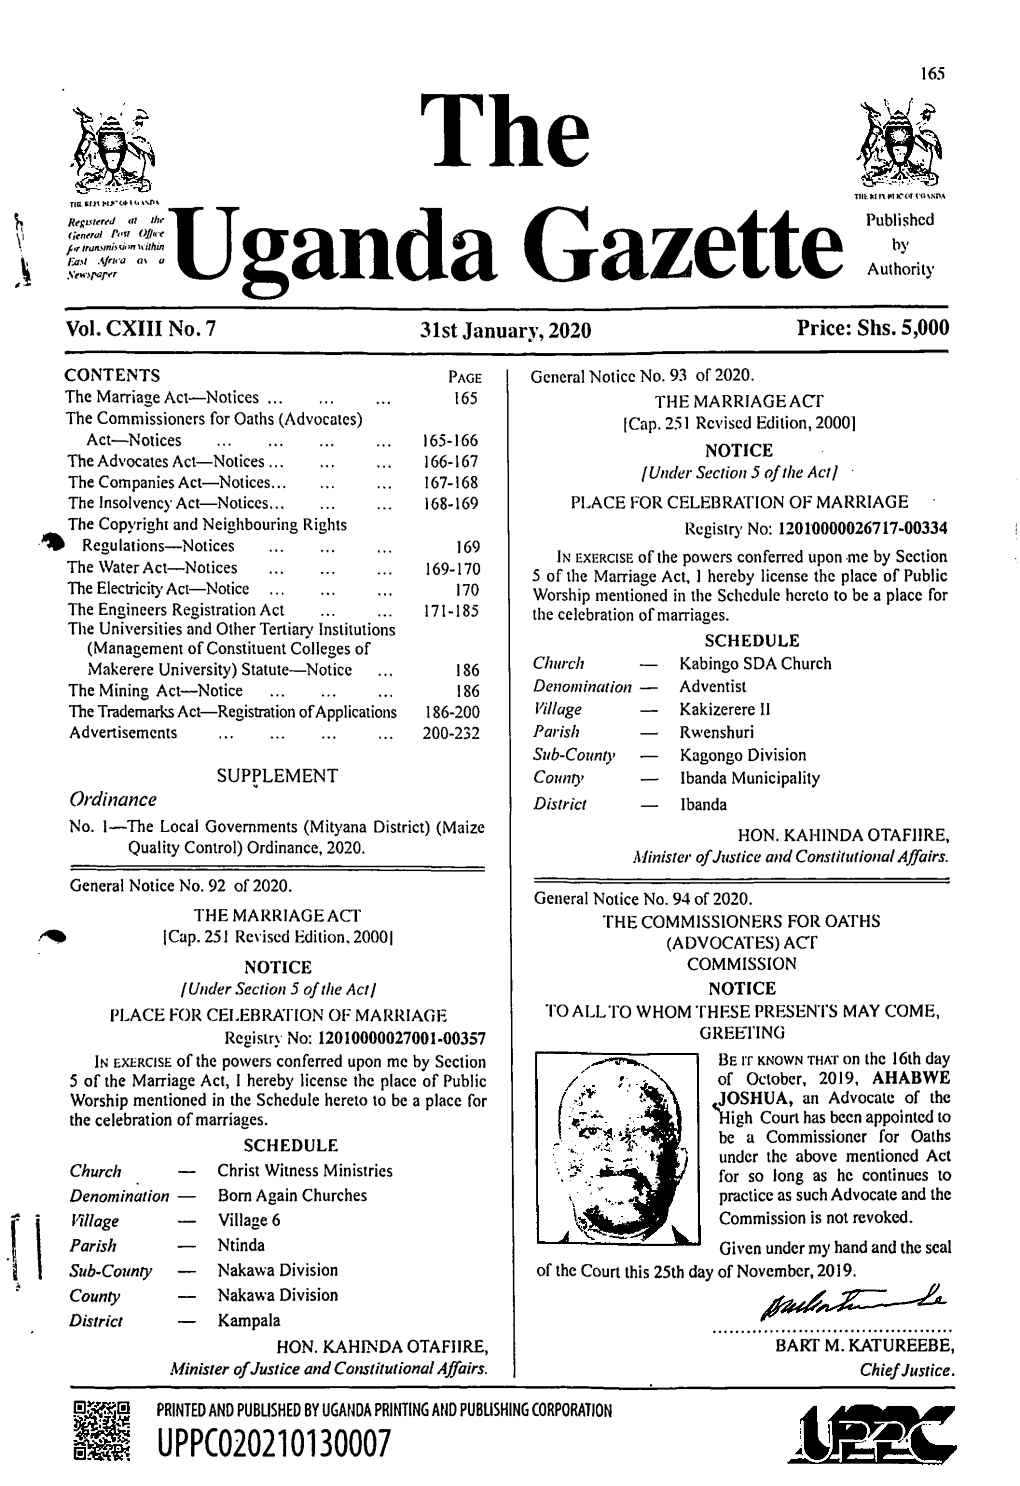 Uganda Gazette Authority